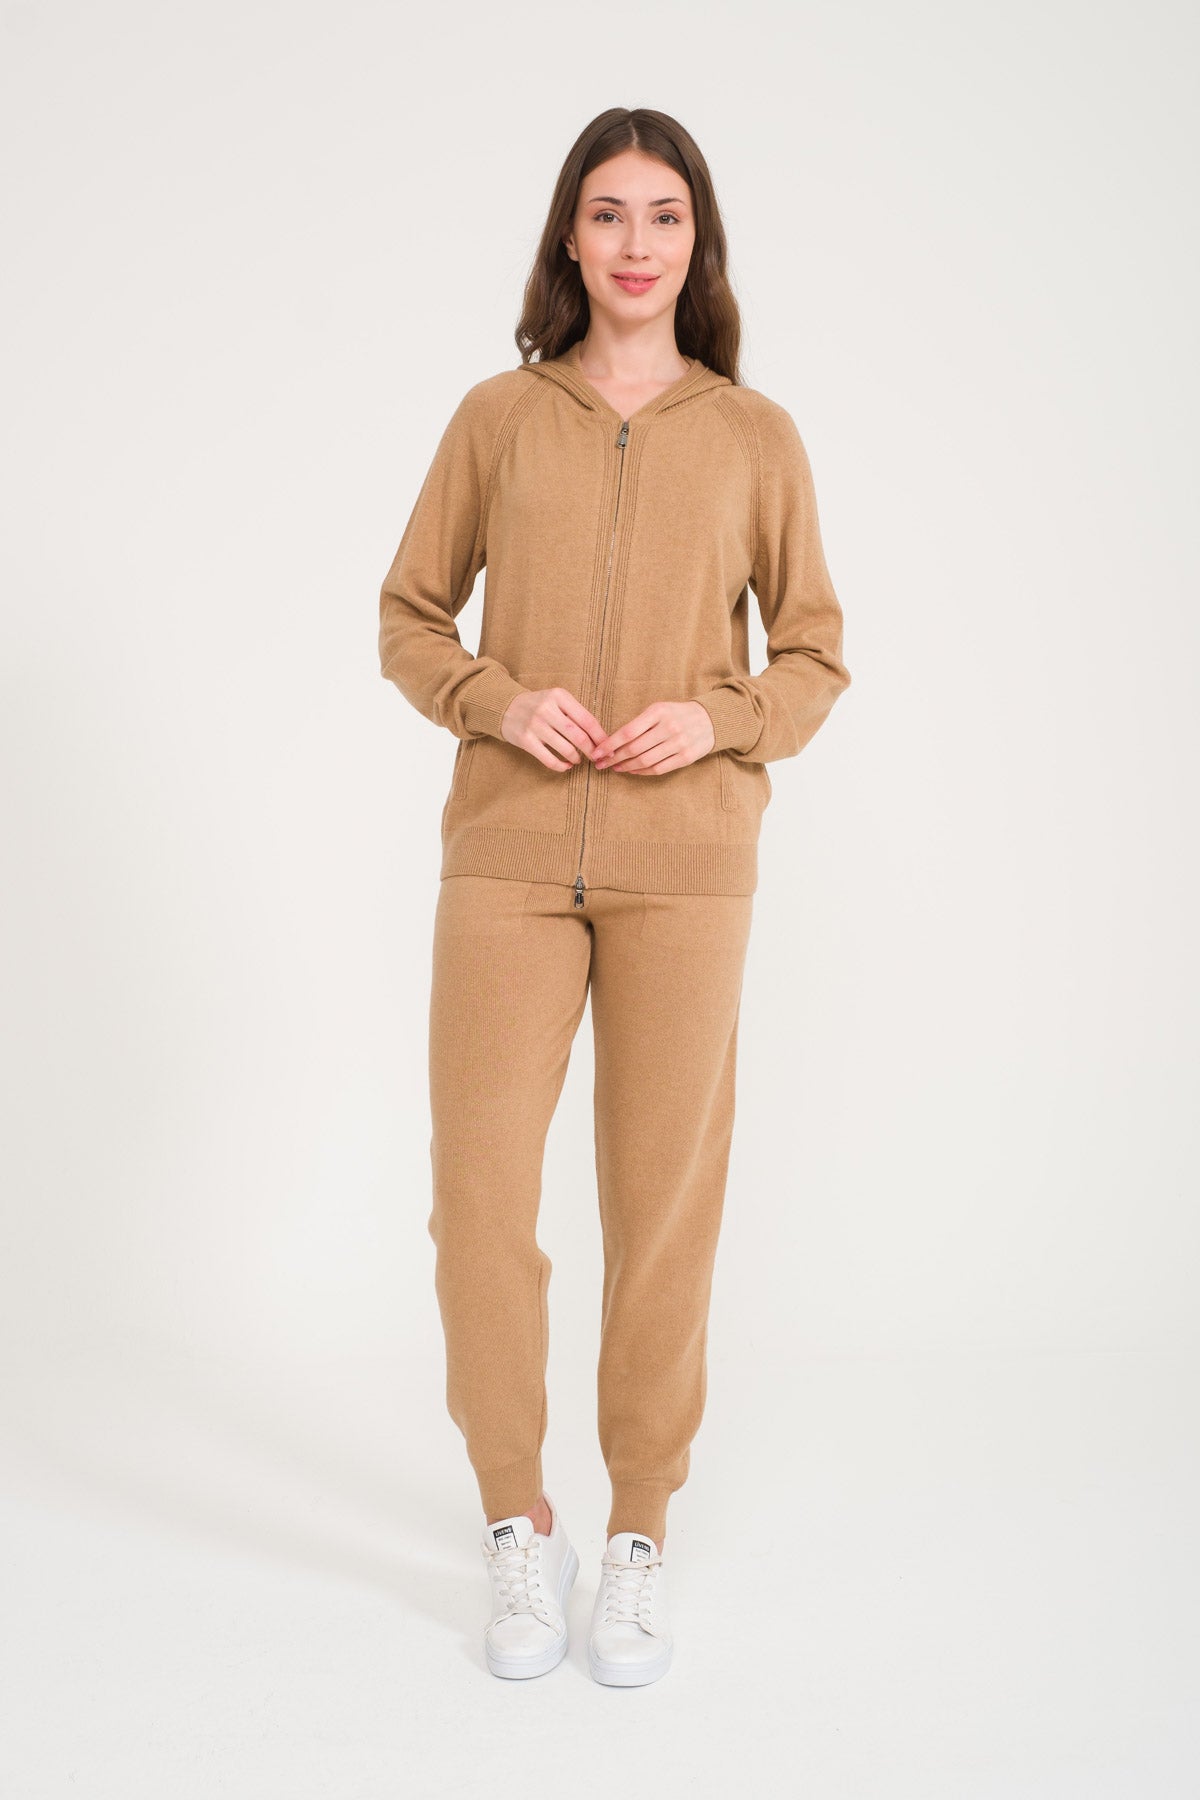 Camel Knit Sweater & Pants Set